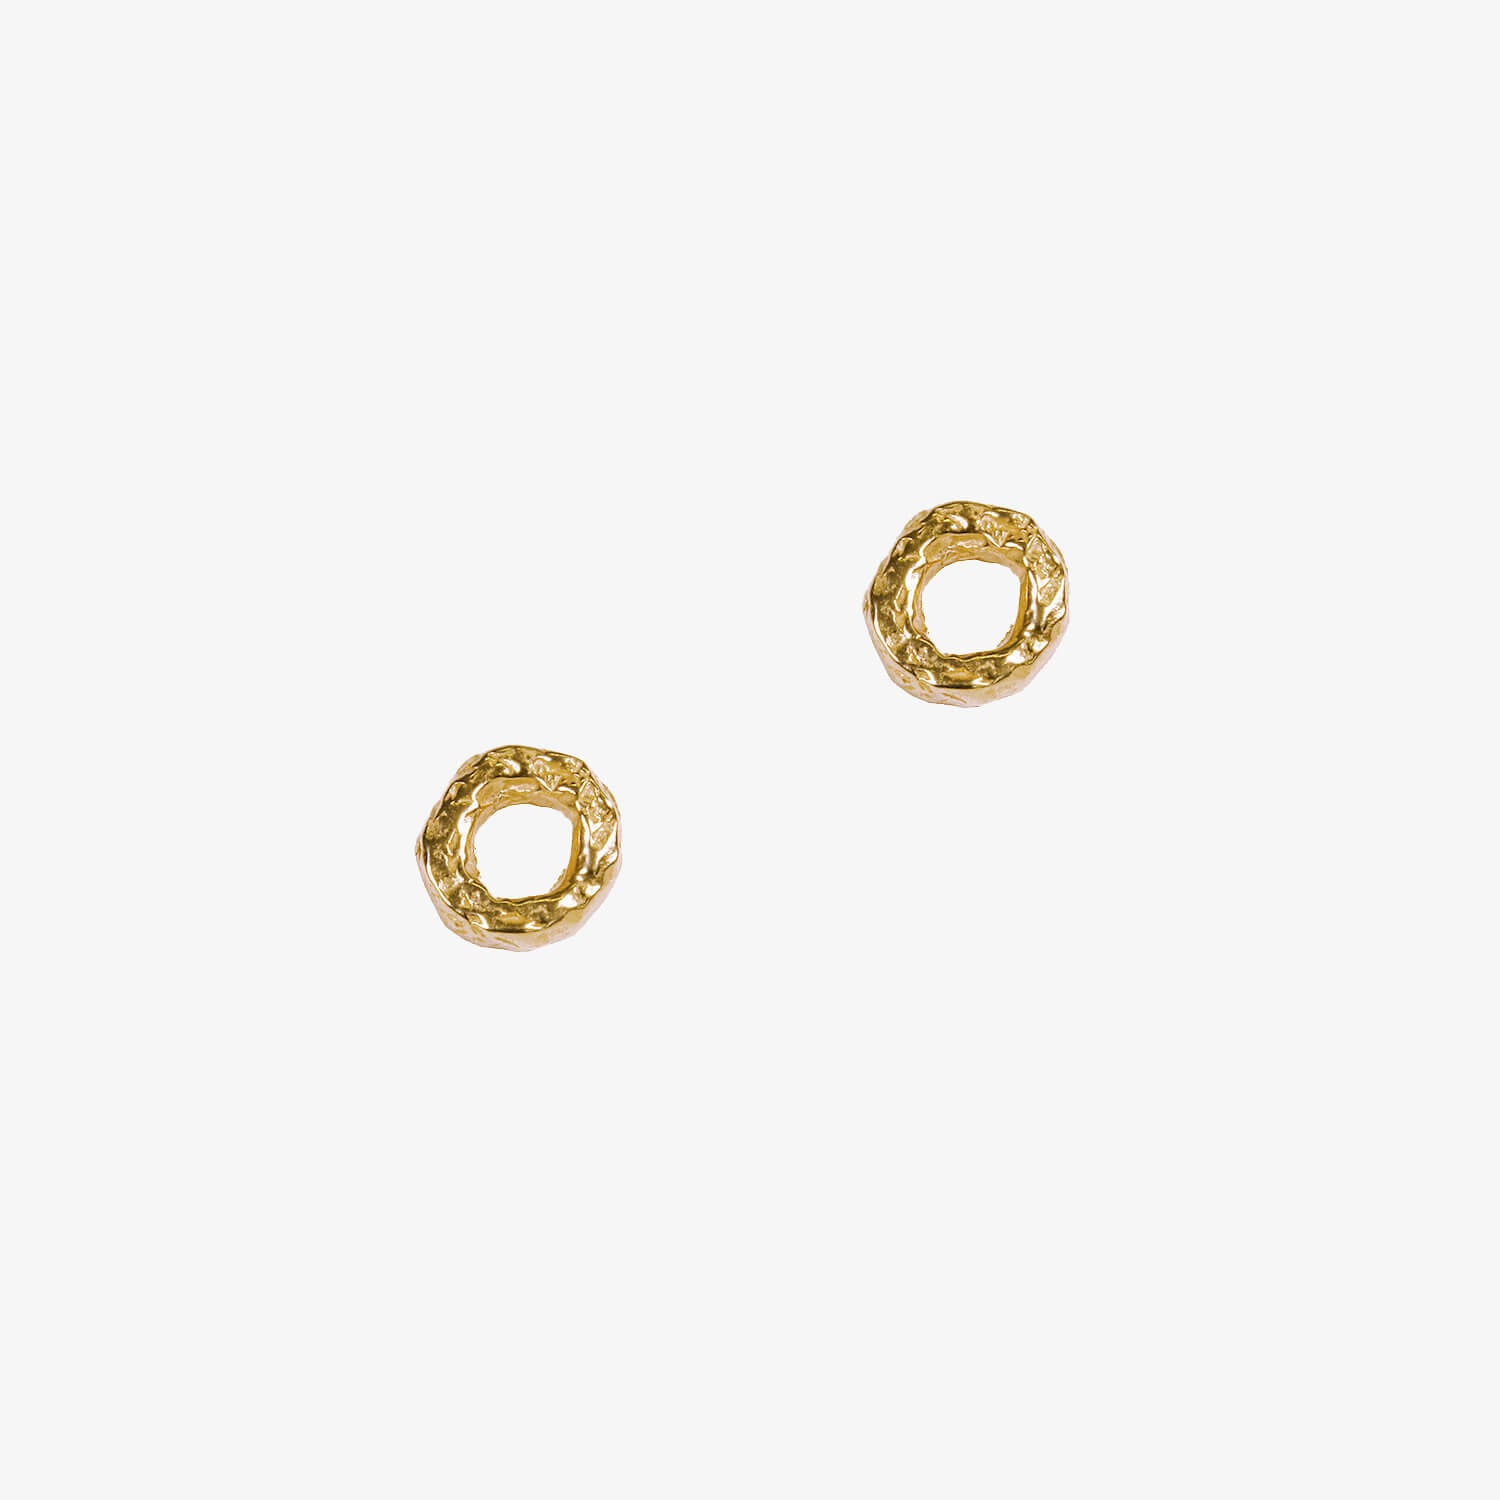 Gold round textured studs by Matthew Calvin Jewellery